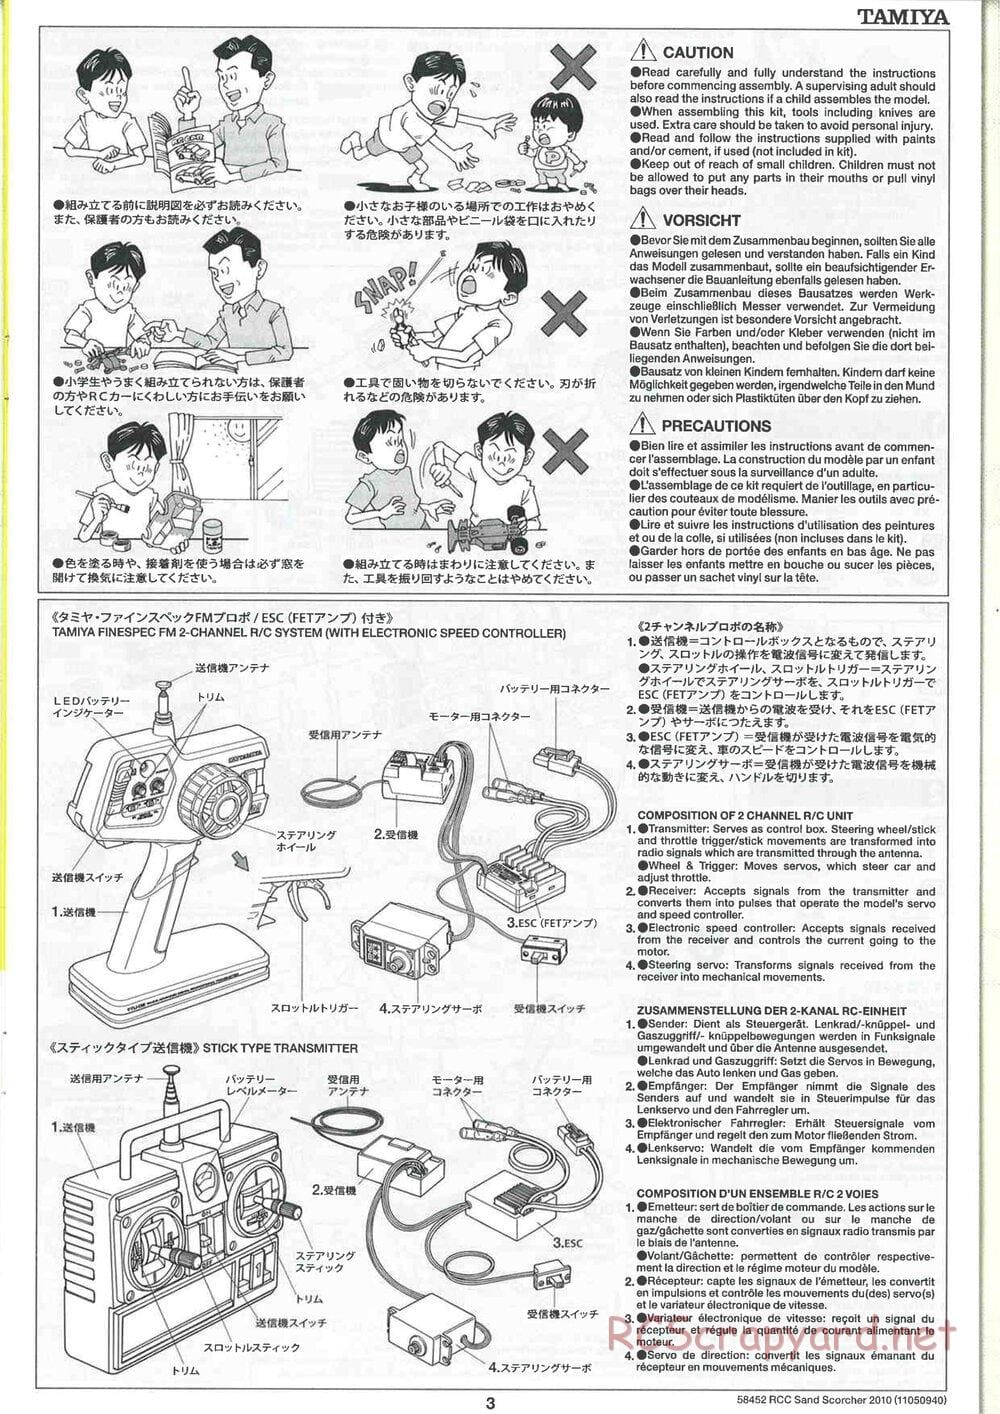 Tamiya - Sand Scorcher 2010 - SRB v1 Chassis - Manual - Page 3